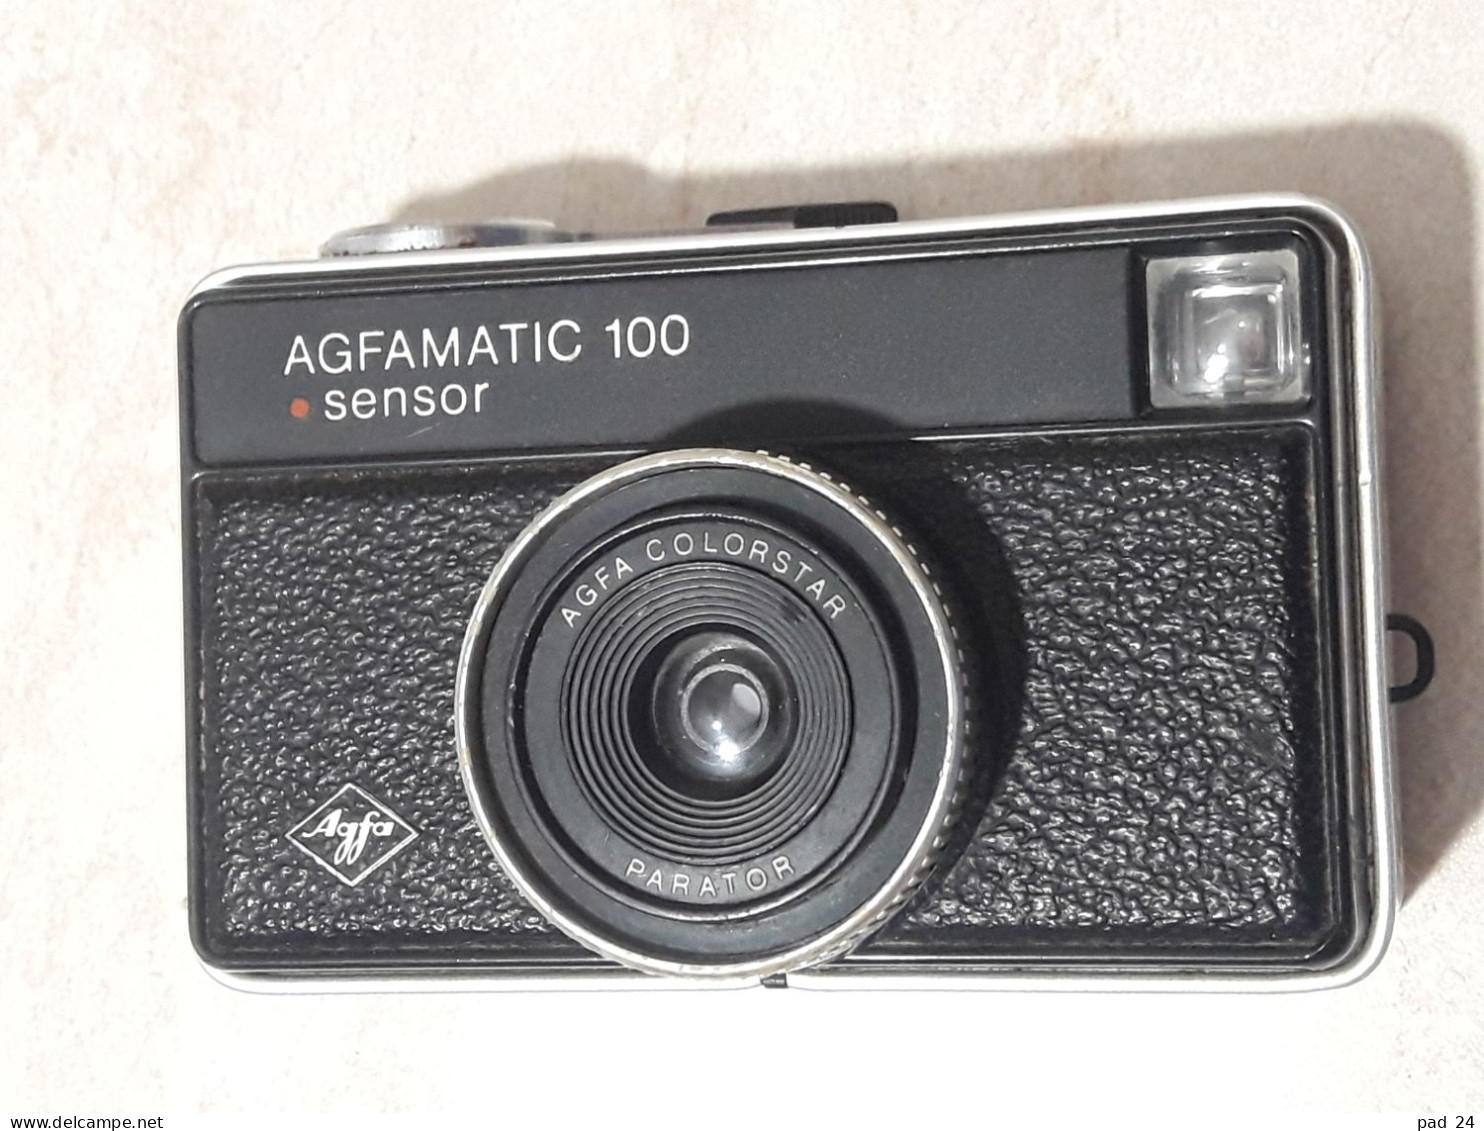 .AGFAMATIC 100 SENSOR - ΣΥΛΛΕΚΤΙΚΗ ΚΑΜΕΡΑ AGFA TOY 1970. (Είναι λειτουργικη, δεν γνωρίζω αν λειτουργεί καλα?) - Fotoapparate